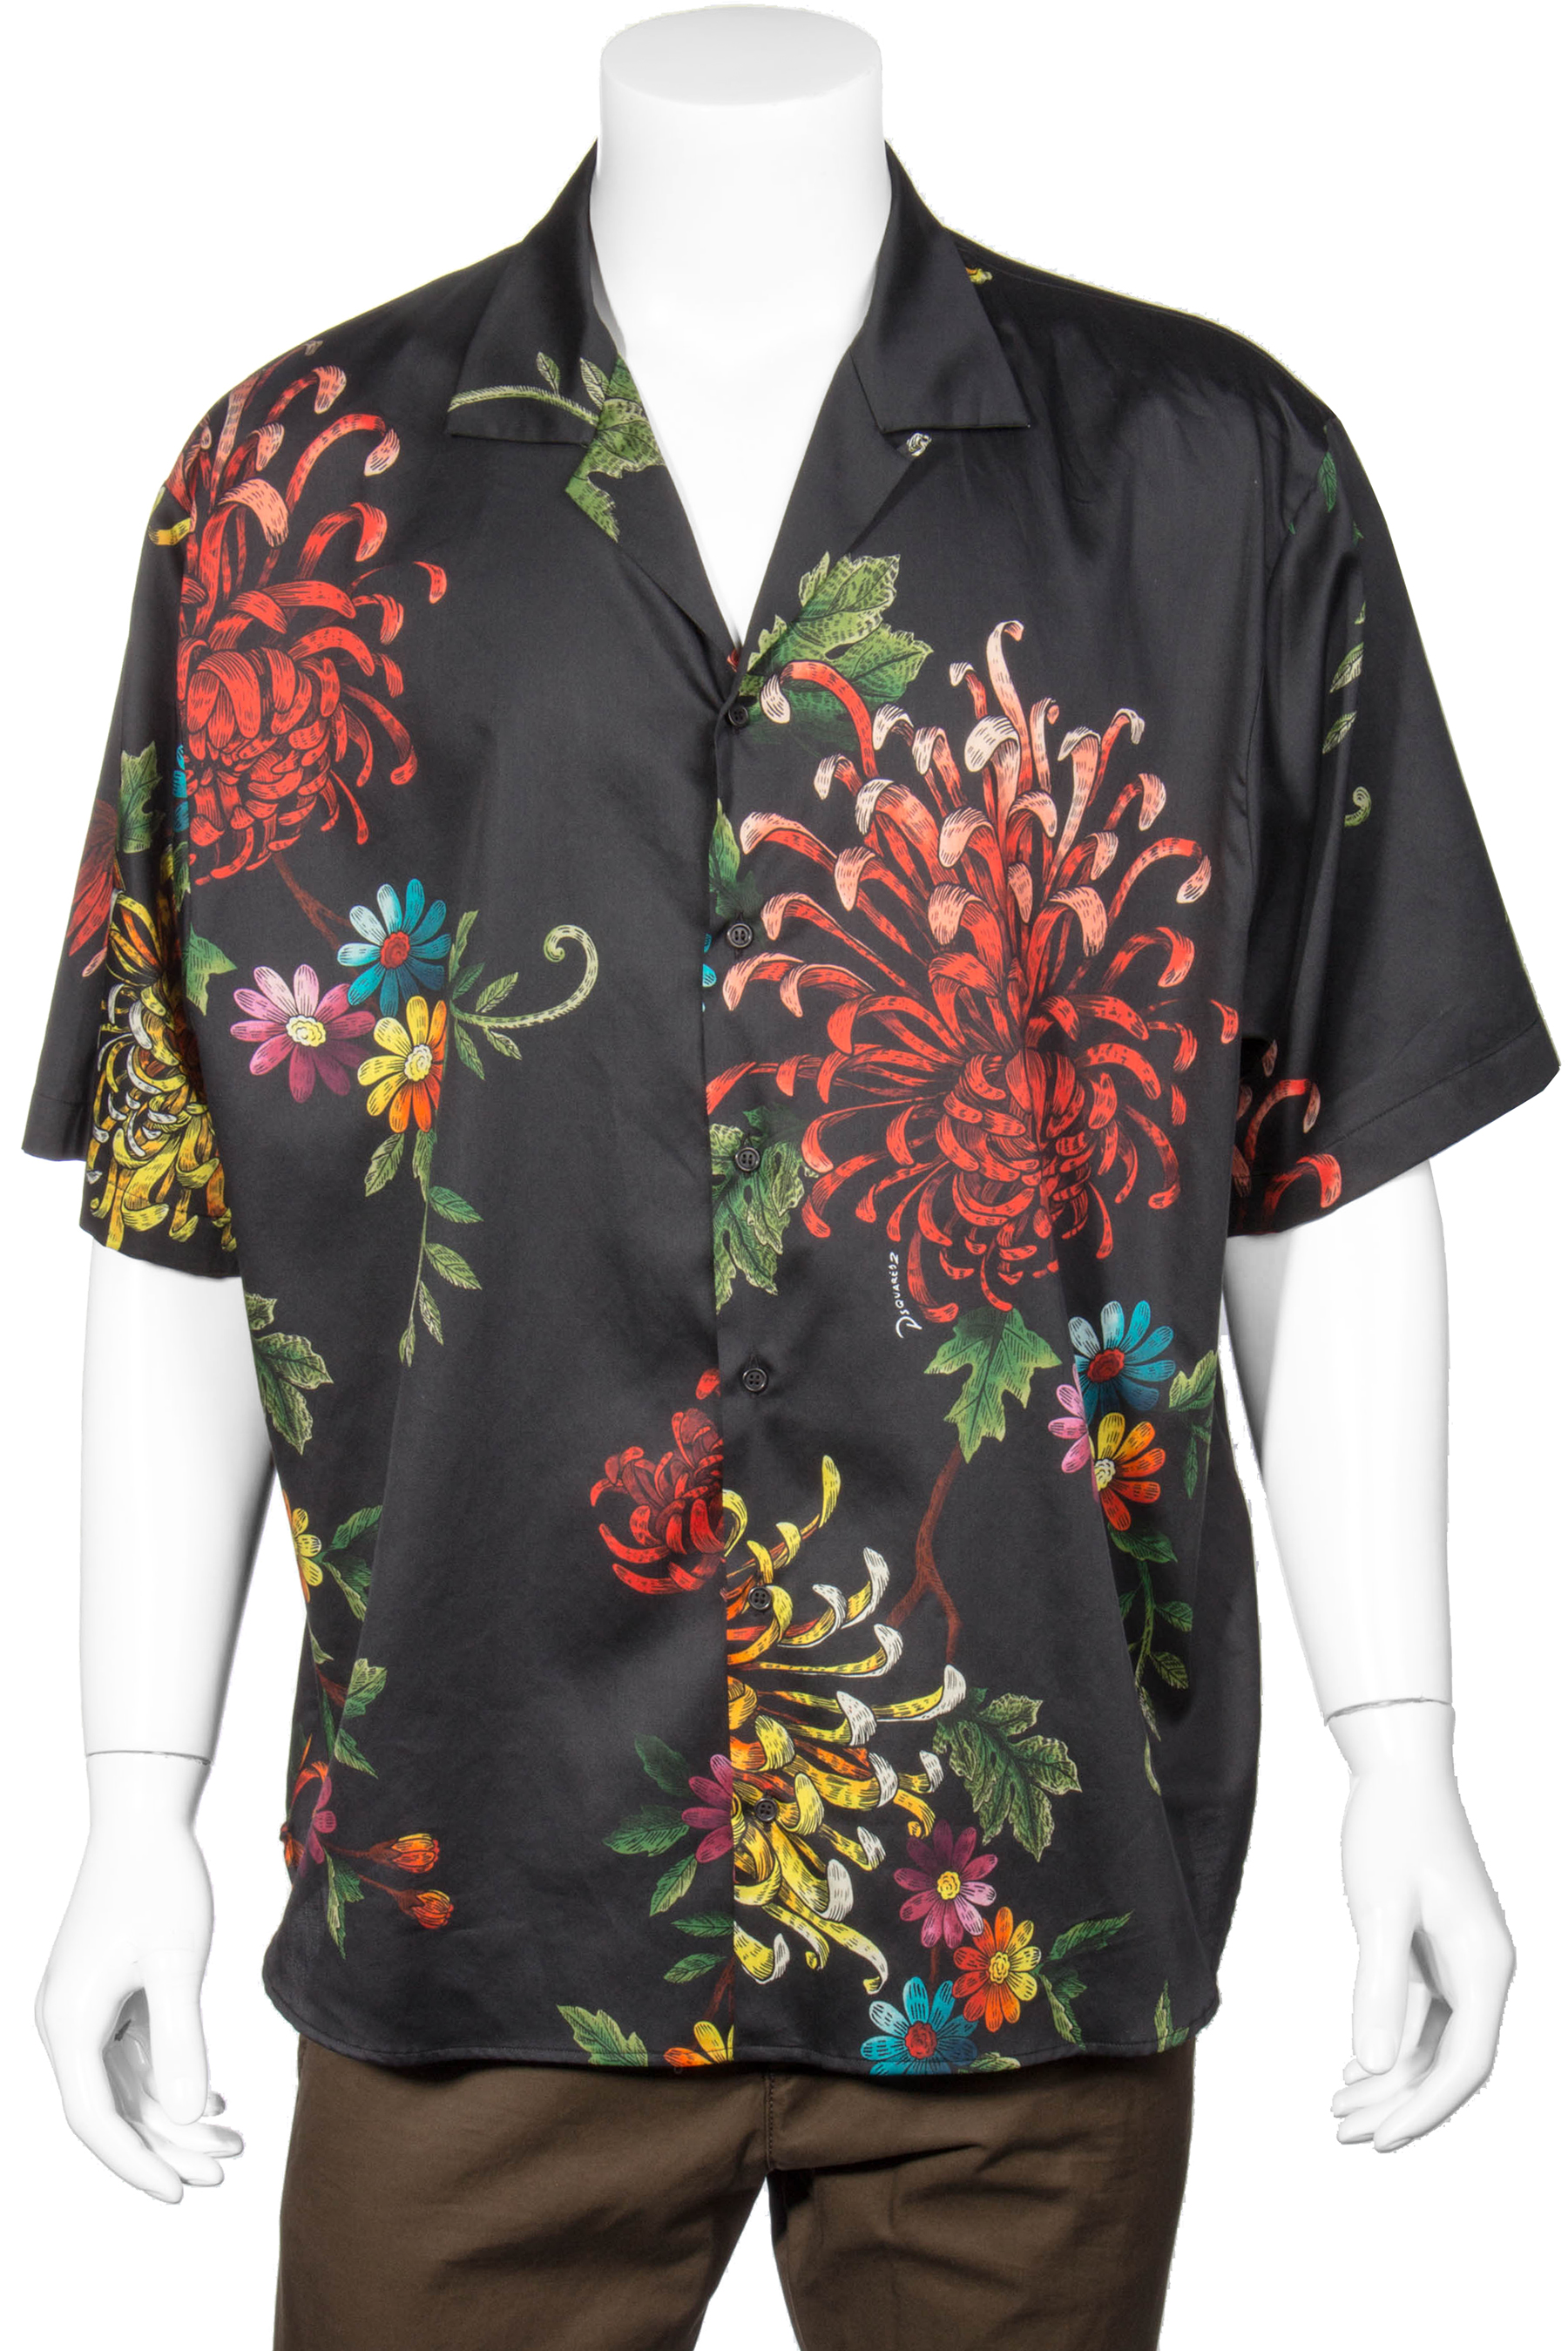 dsquared2 hawaiian shirt